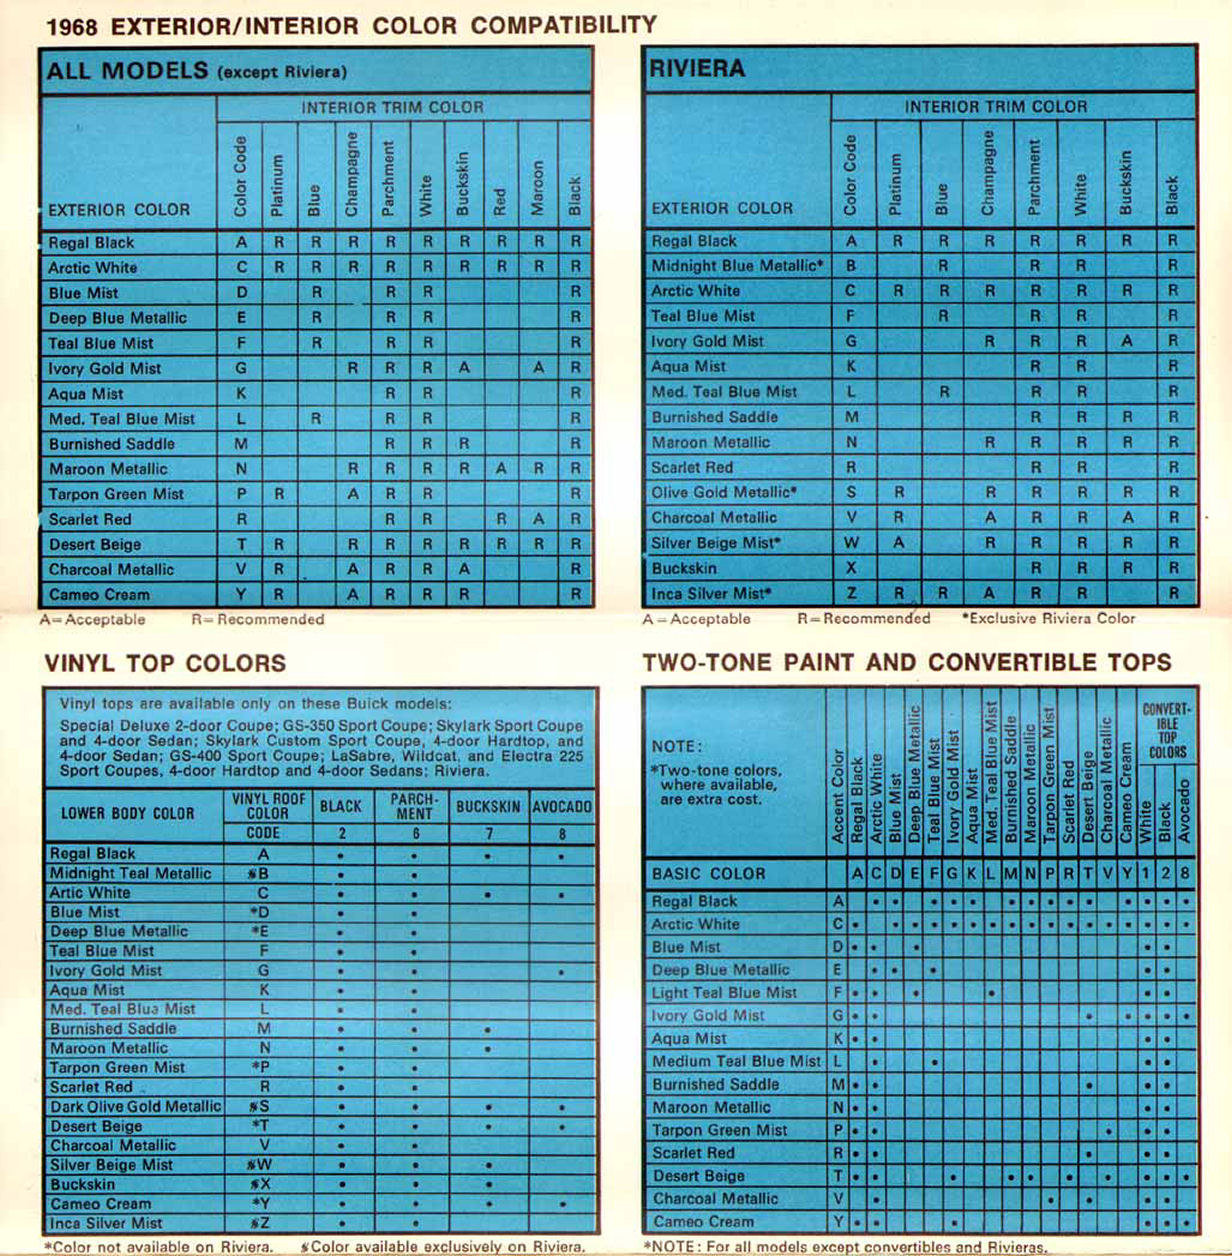 1968 Buick Exterior Colors Chart-06-07